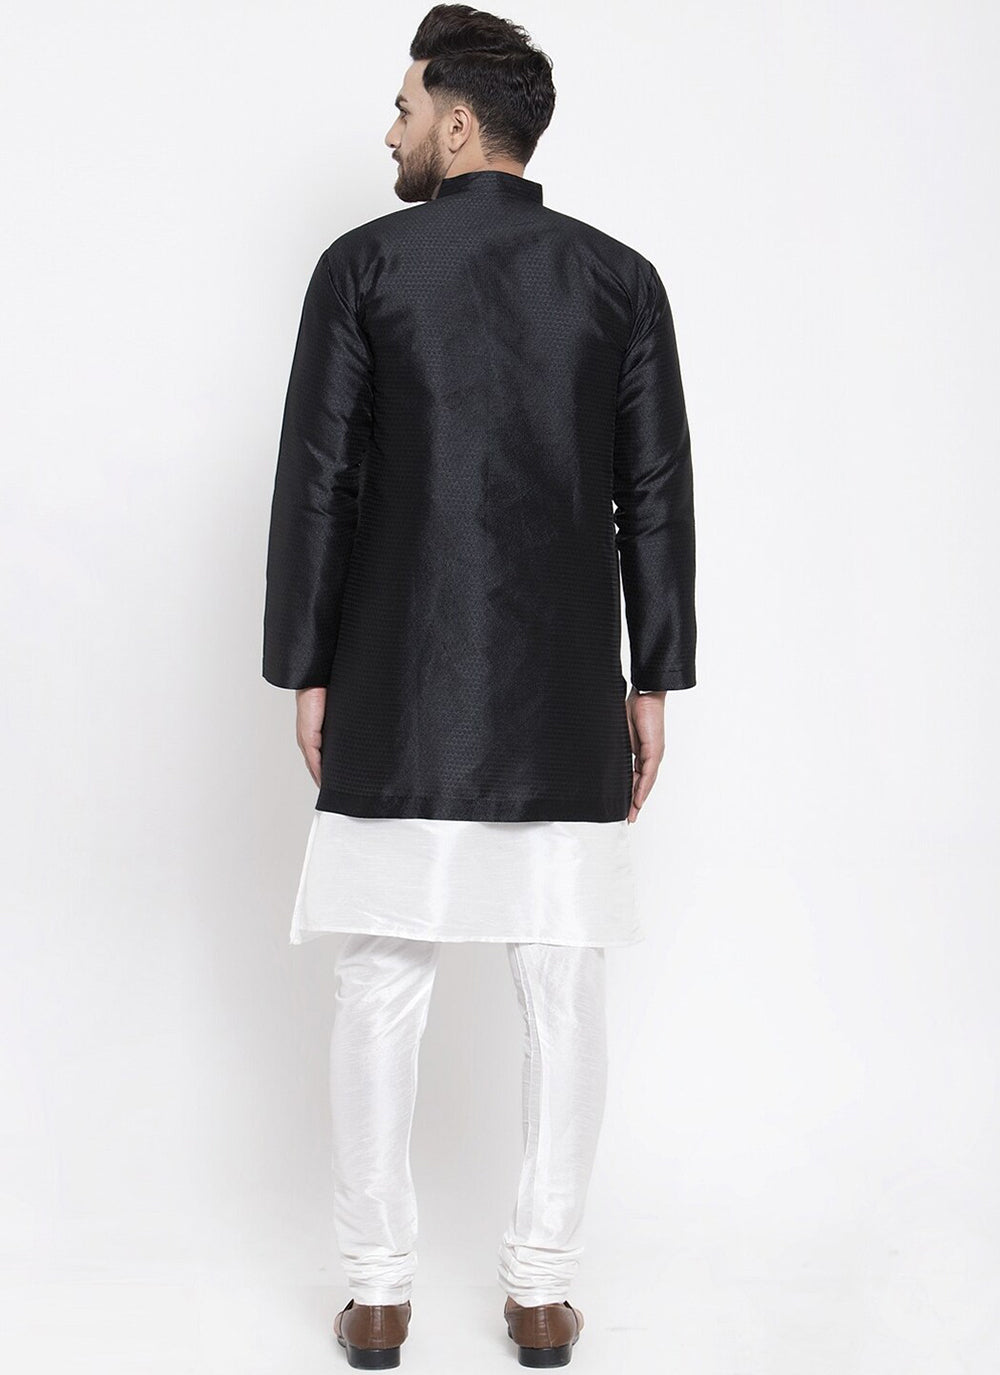 Fancy Black and White Kurta Payjama With Jacket